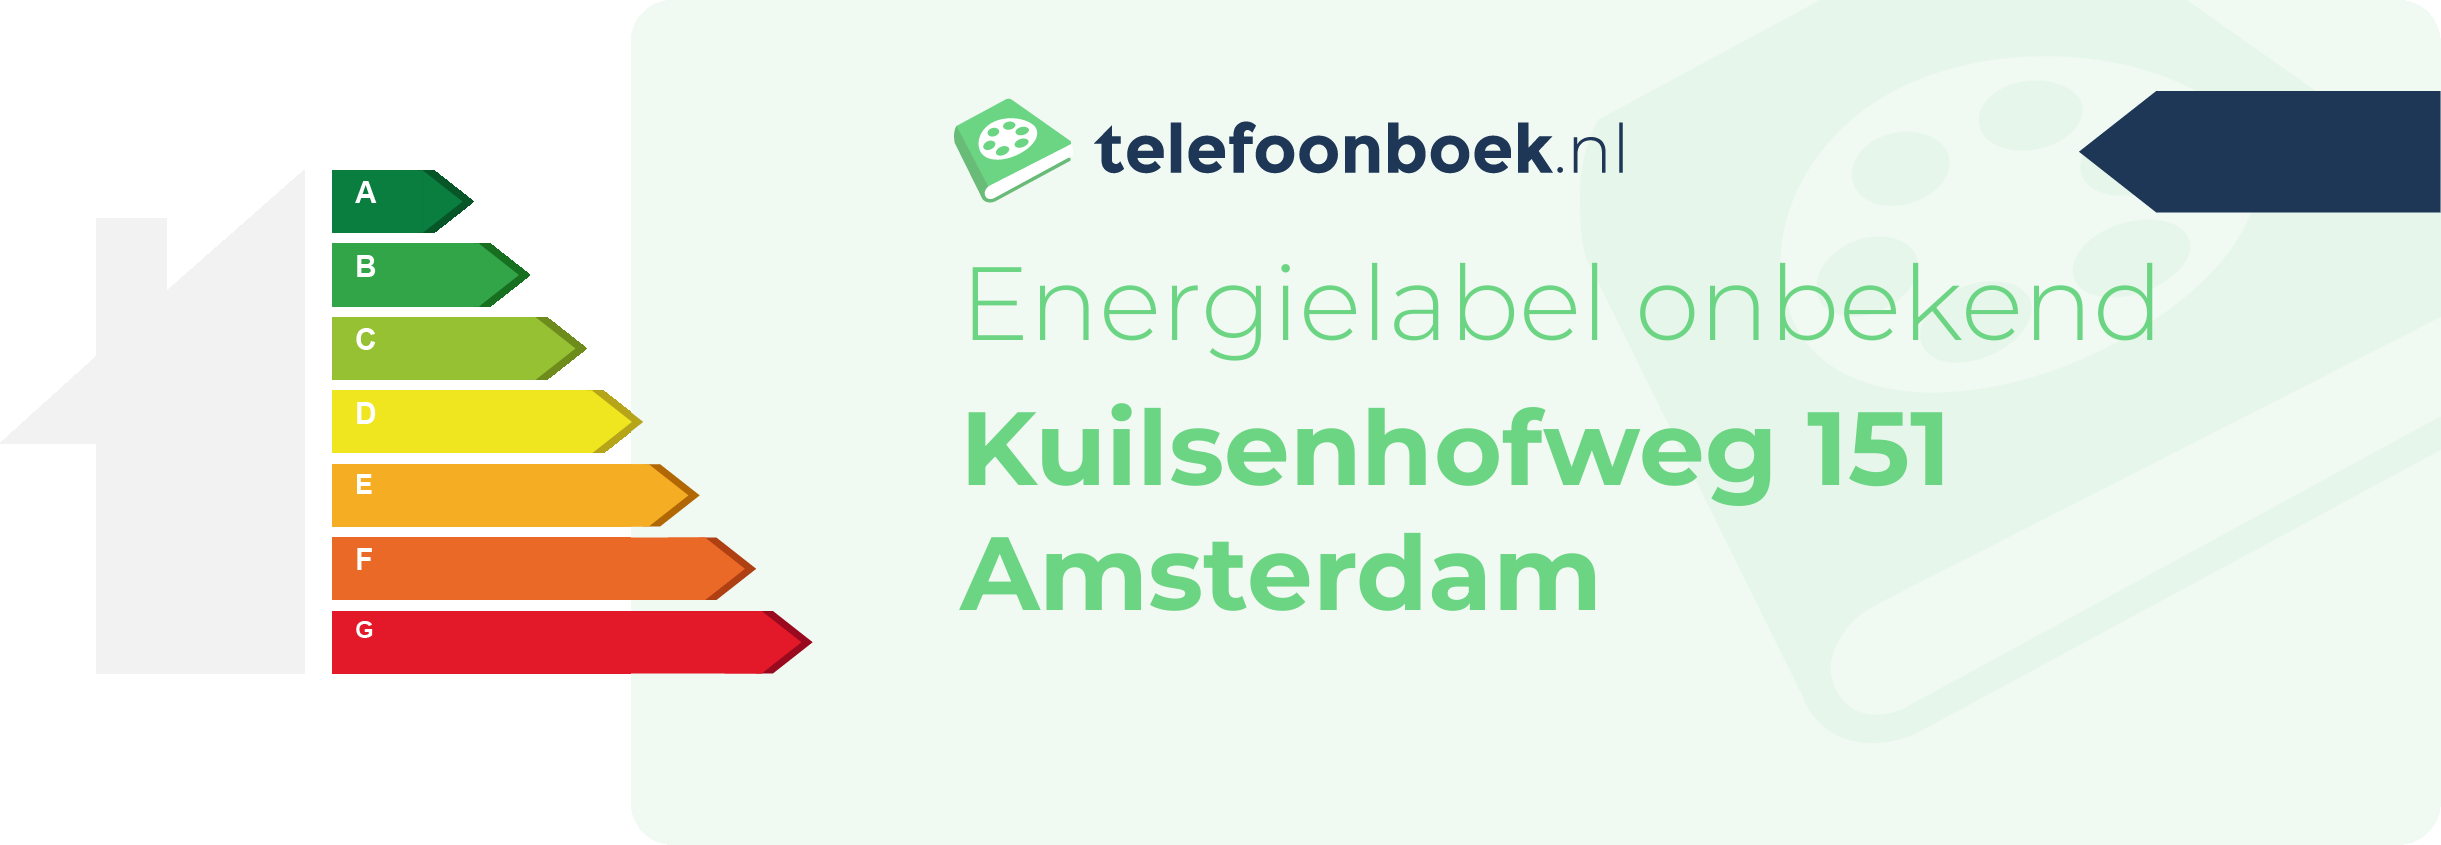 Energielabel Kuilsenhofweg 151 Amsterdam